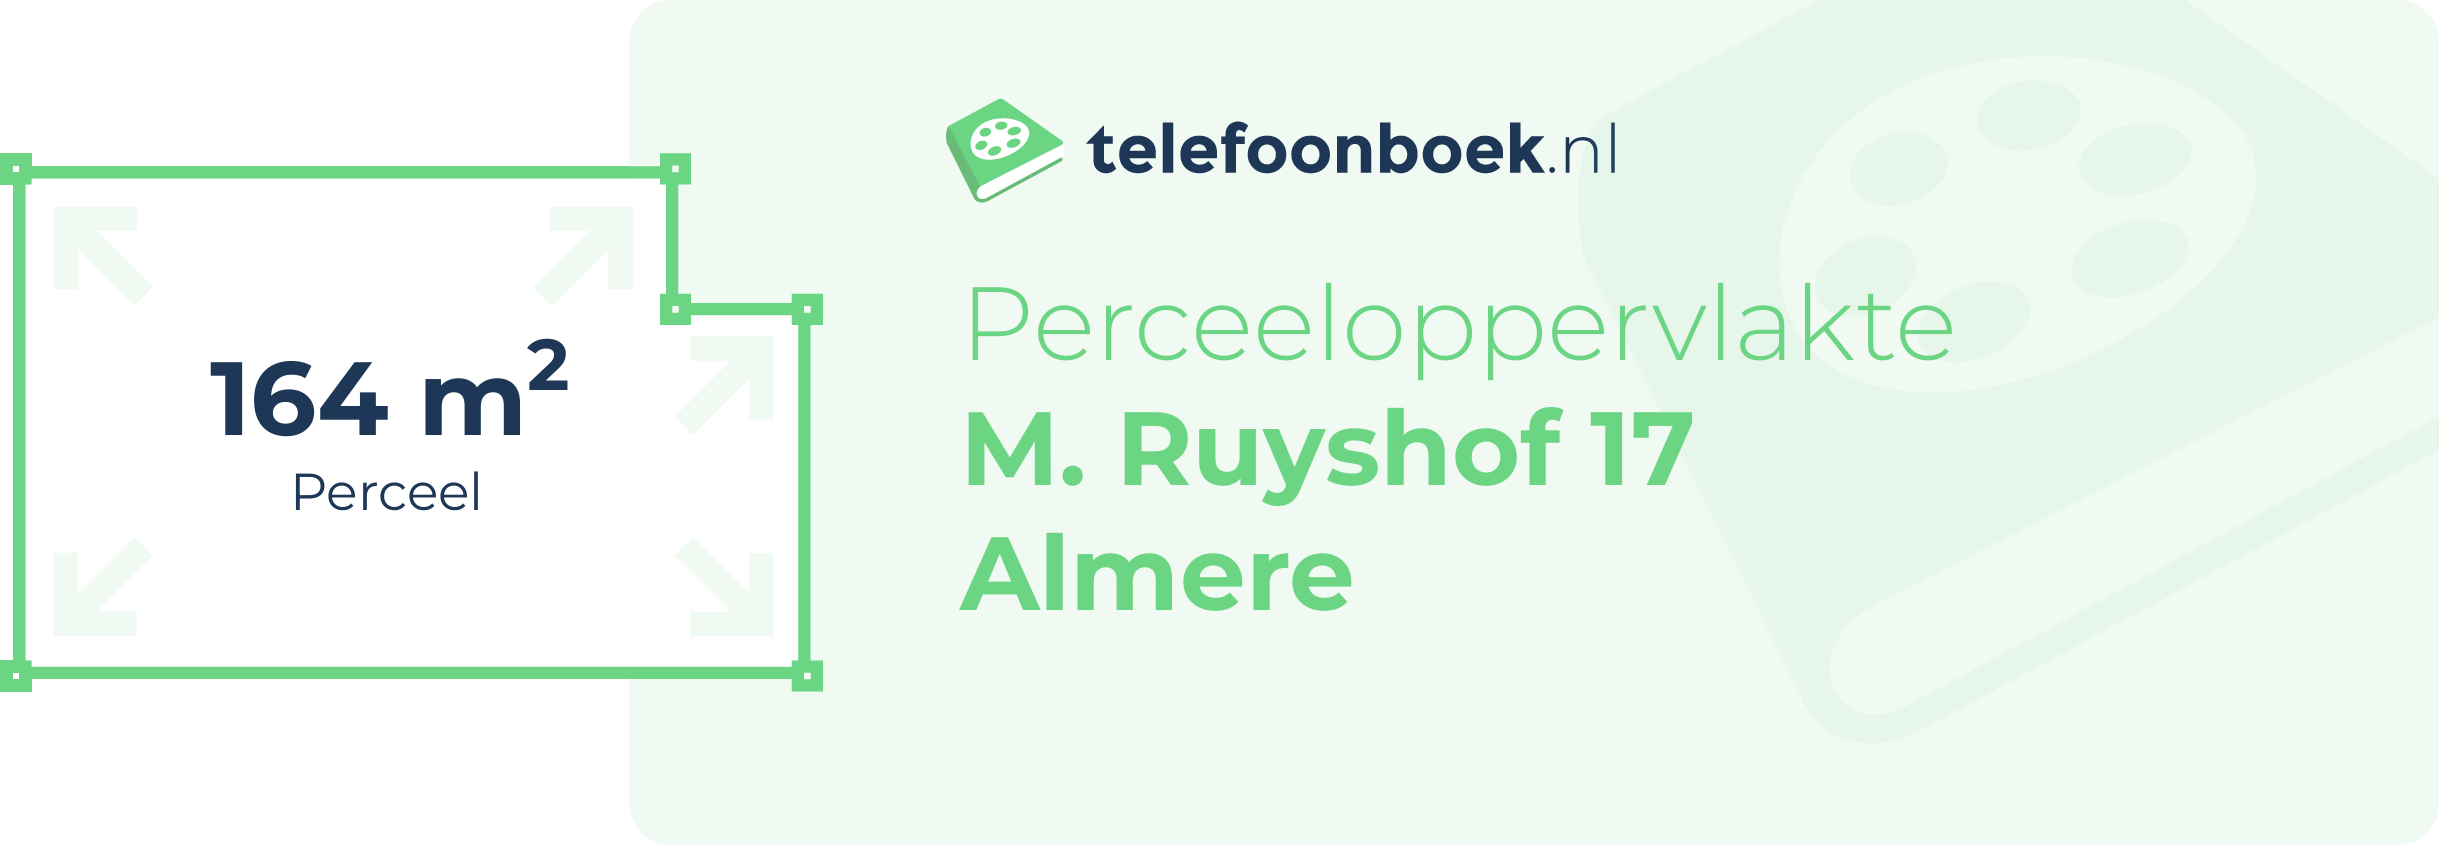 Perceeloppervlakte M. Ruyshof 17 Almere